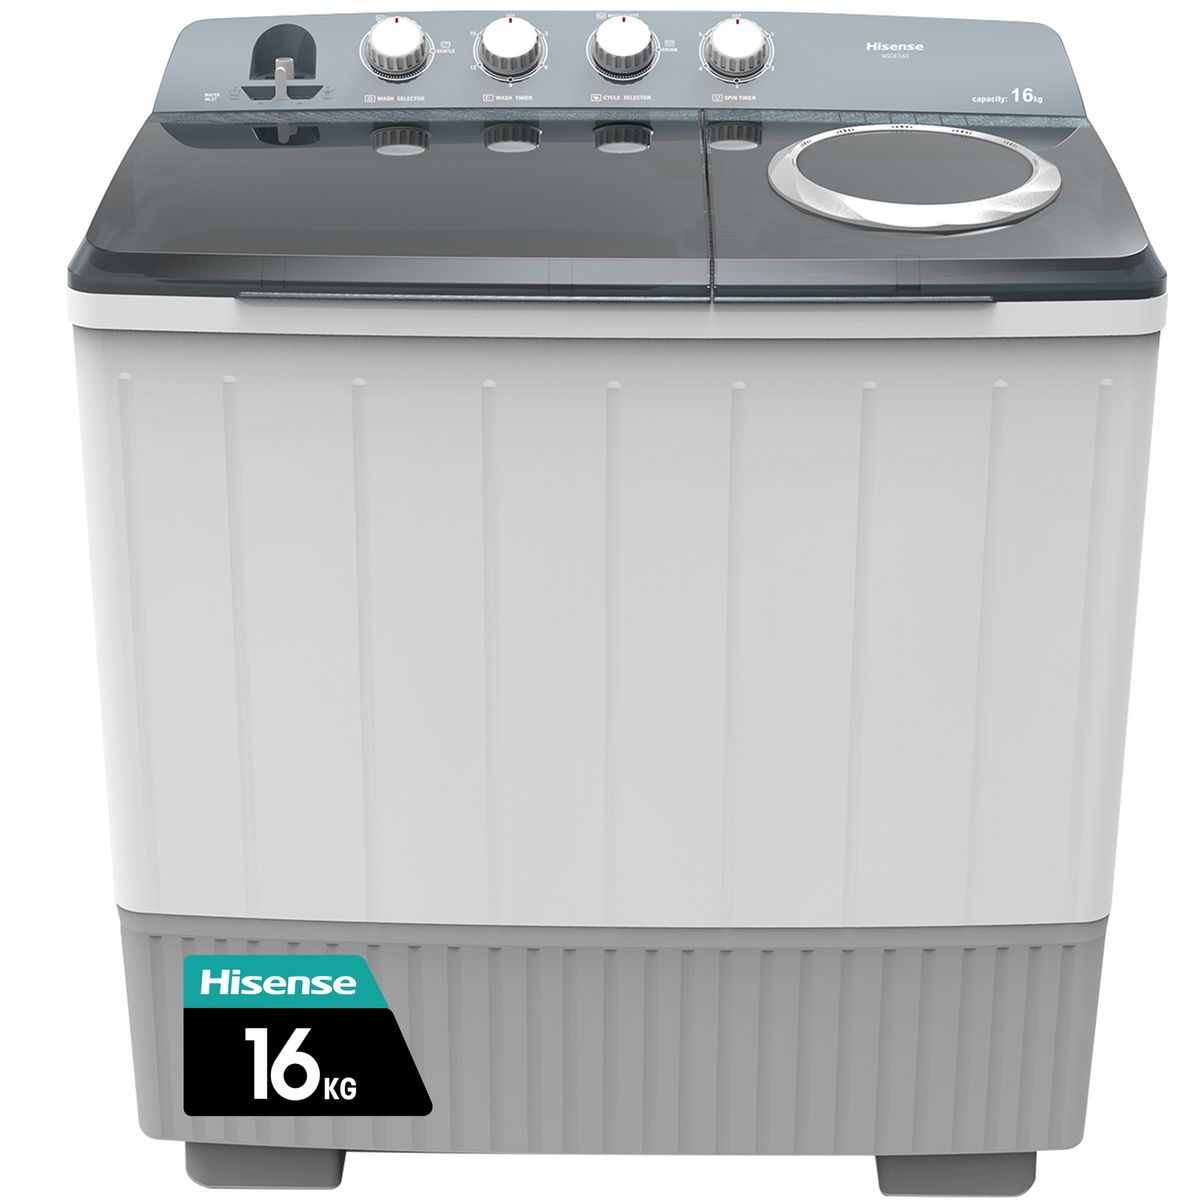 Hisense - Twin Tub Washing Machine 16kg - White